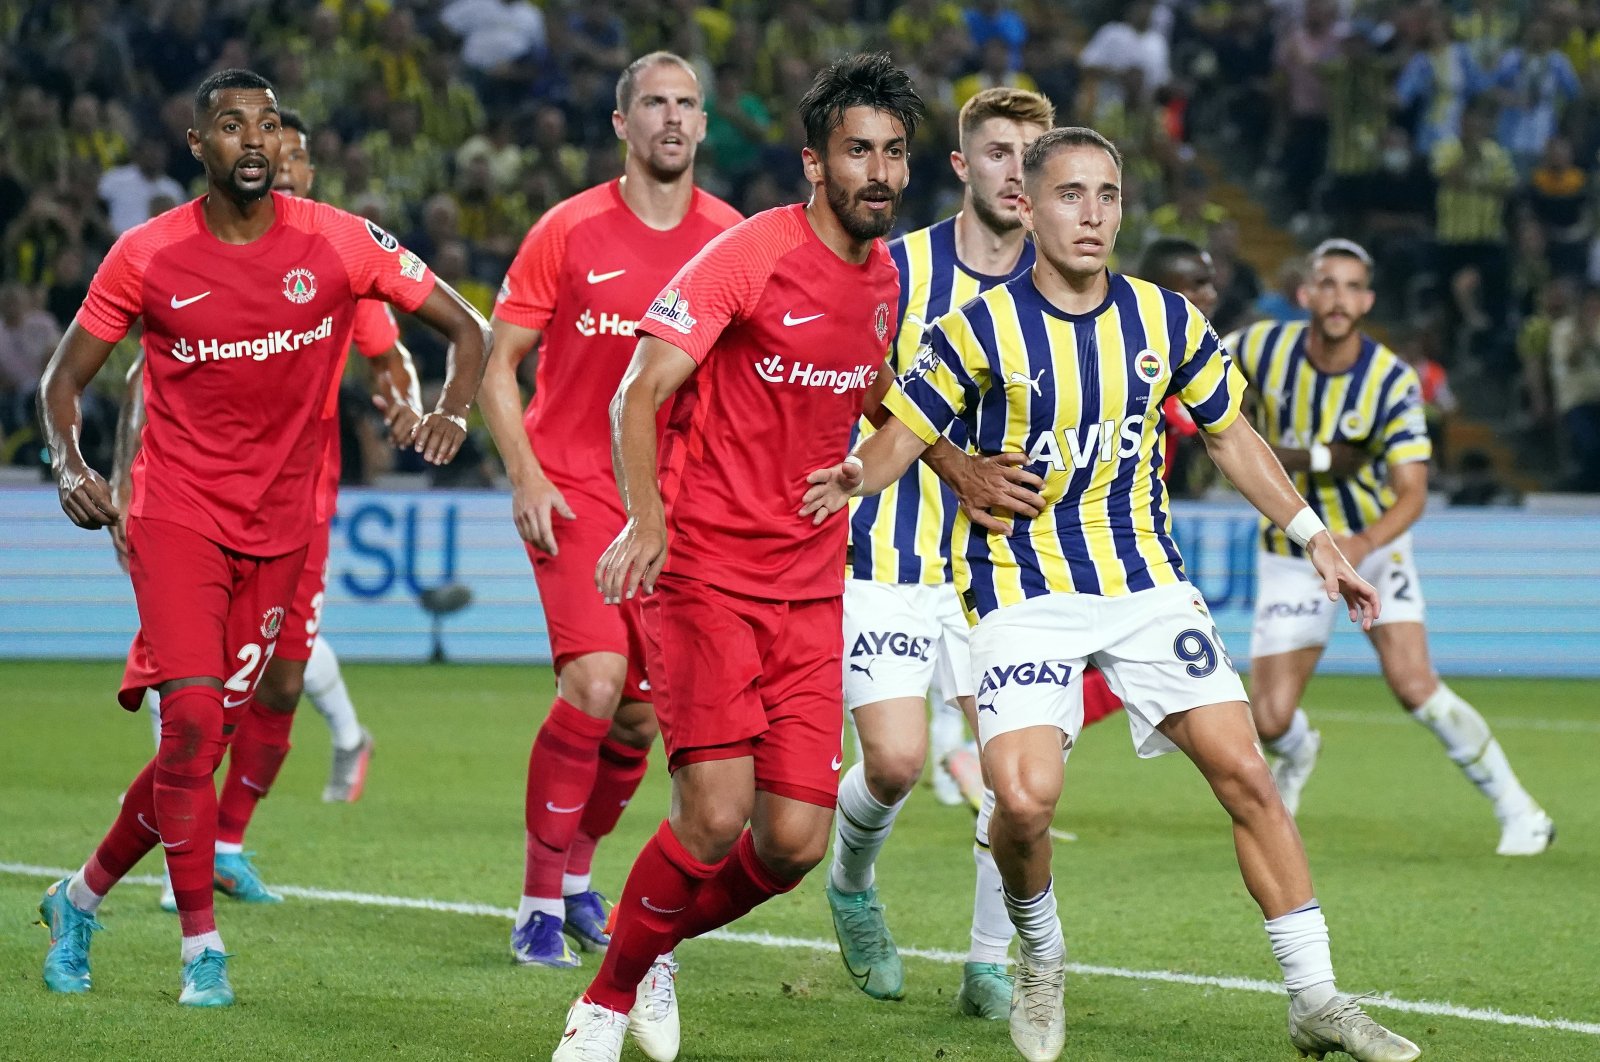 Fenerbahçe and Ümraniyespor players in action during a Süper Lig match, Aug. 9, 2022. (IHA Photo)